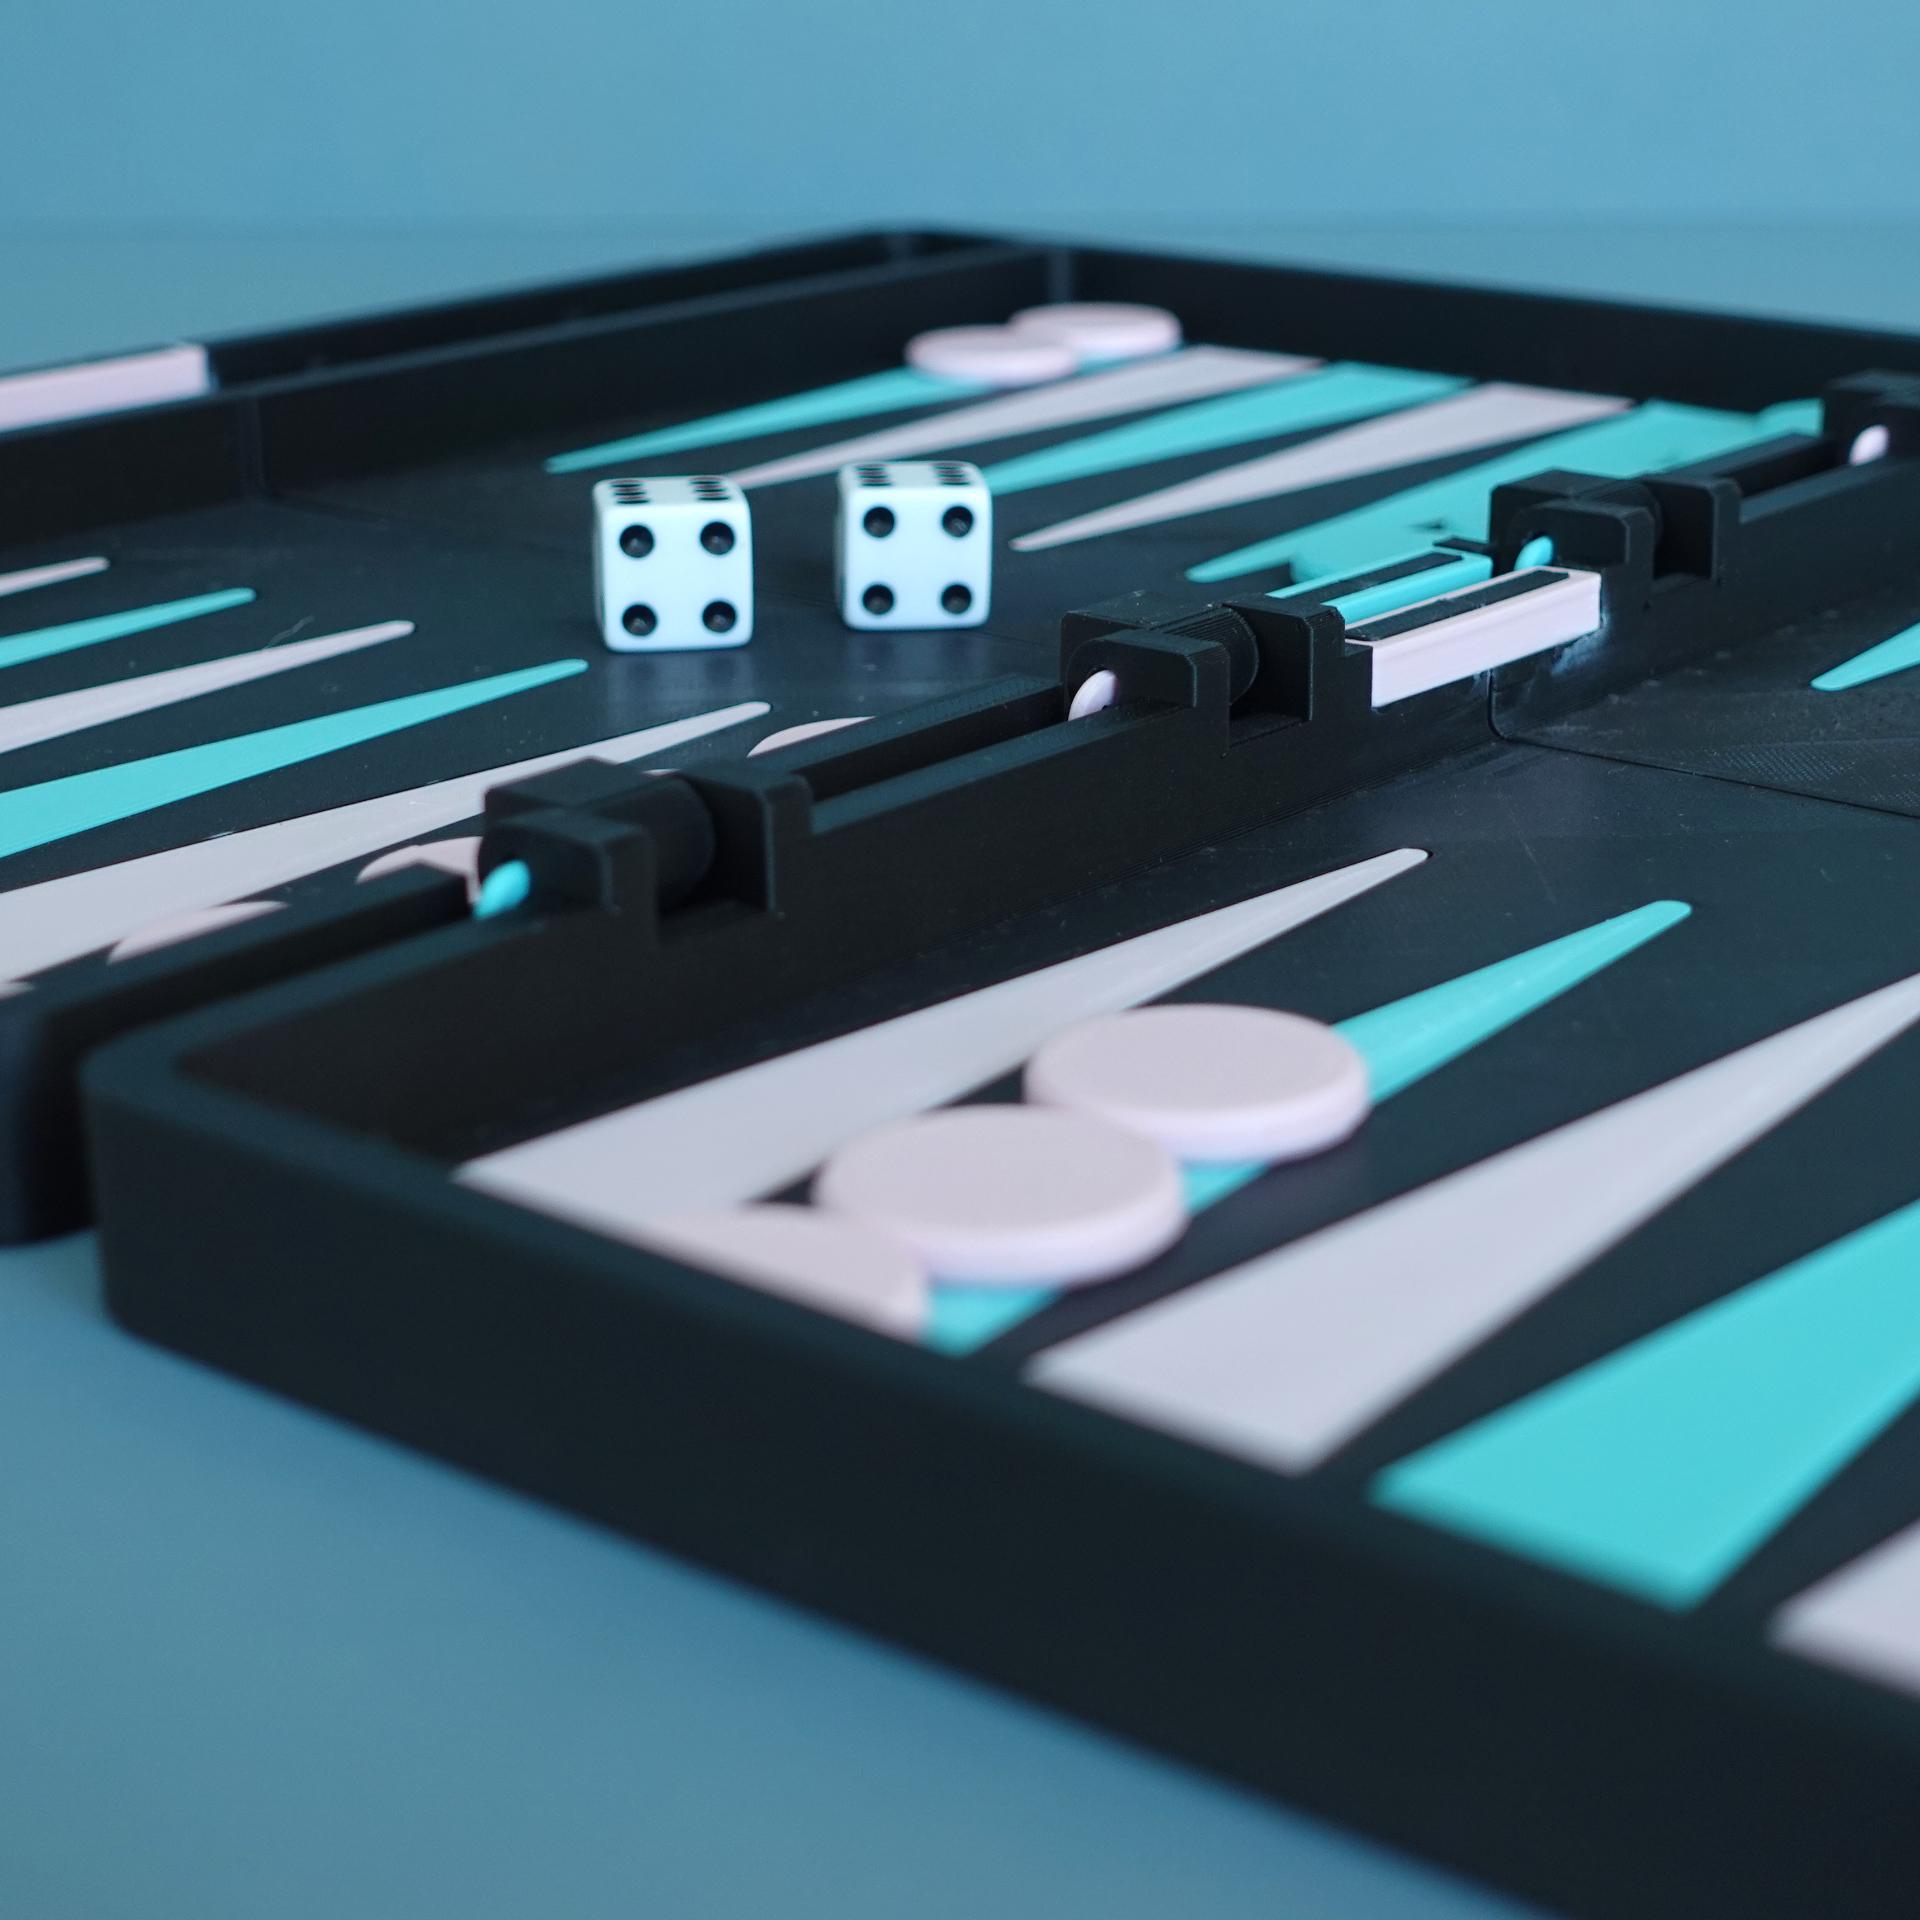 Backgammon set 3d model